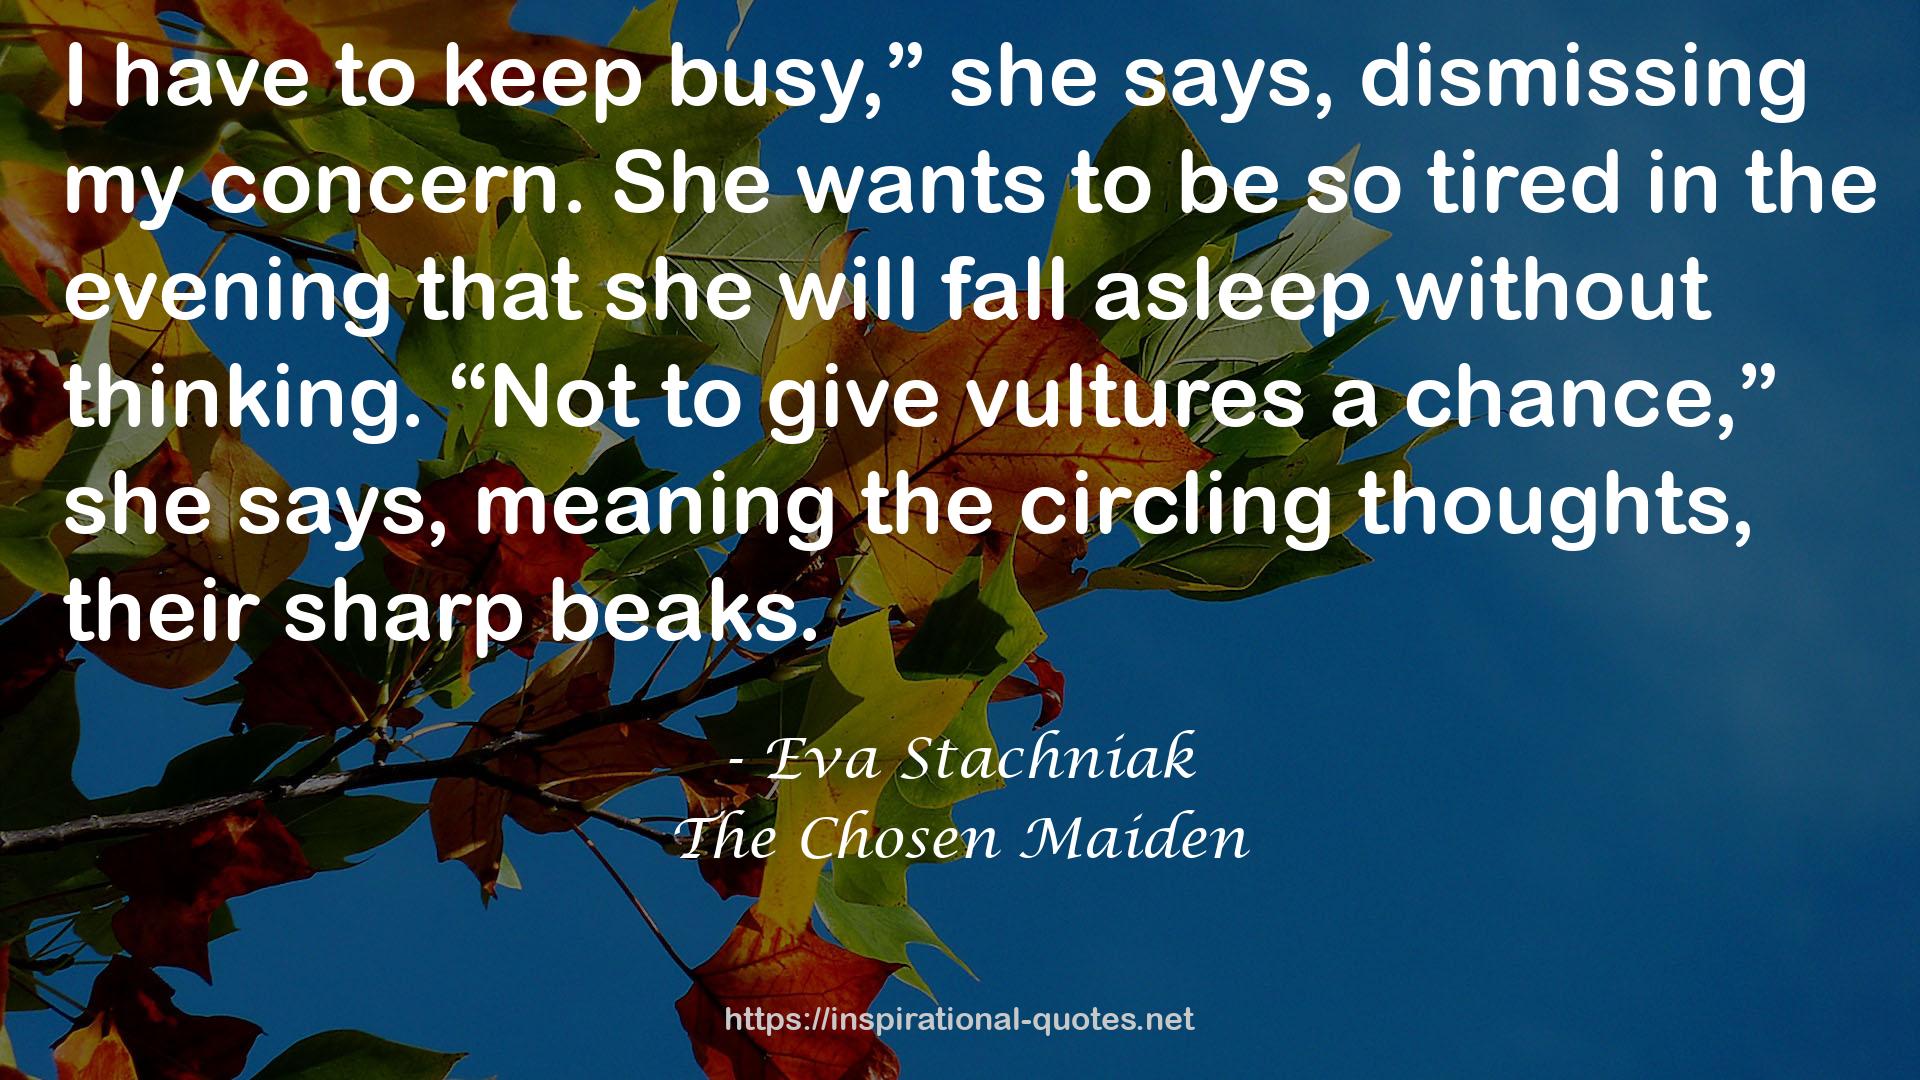 The Chosen Maiden QUOTES